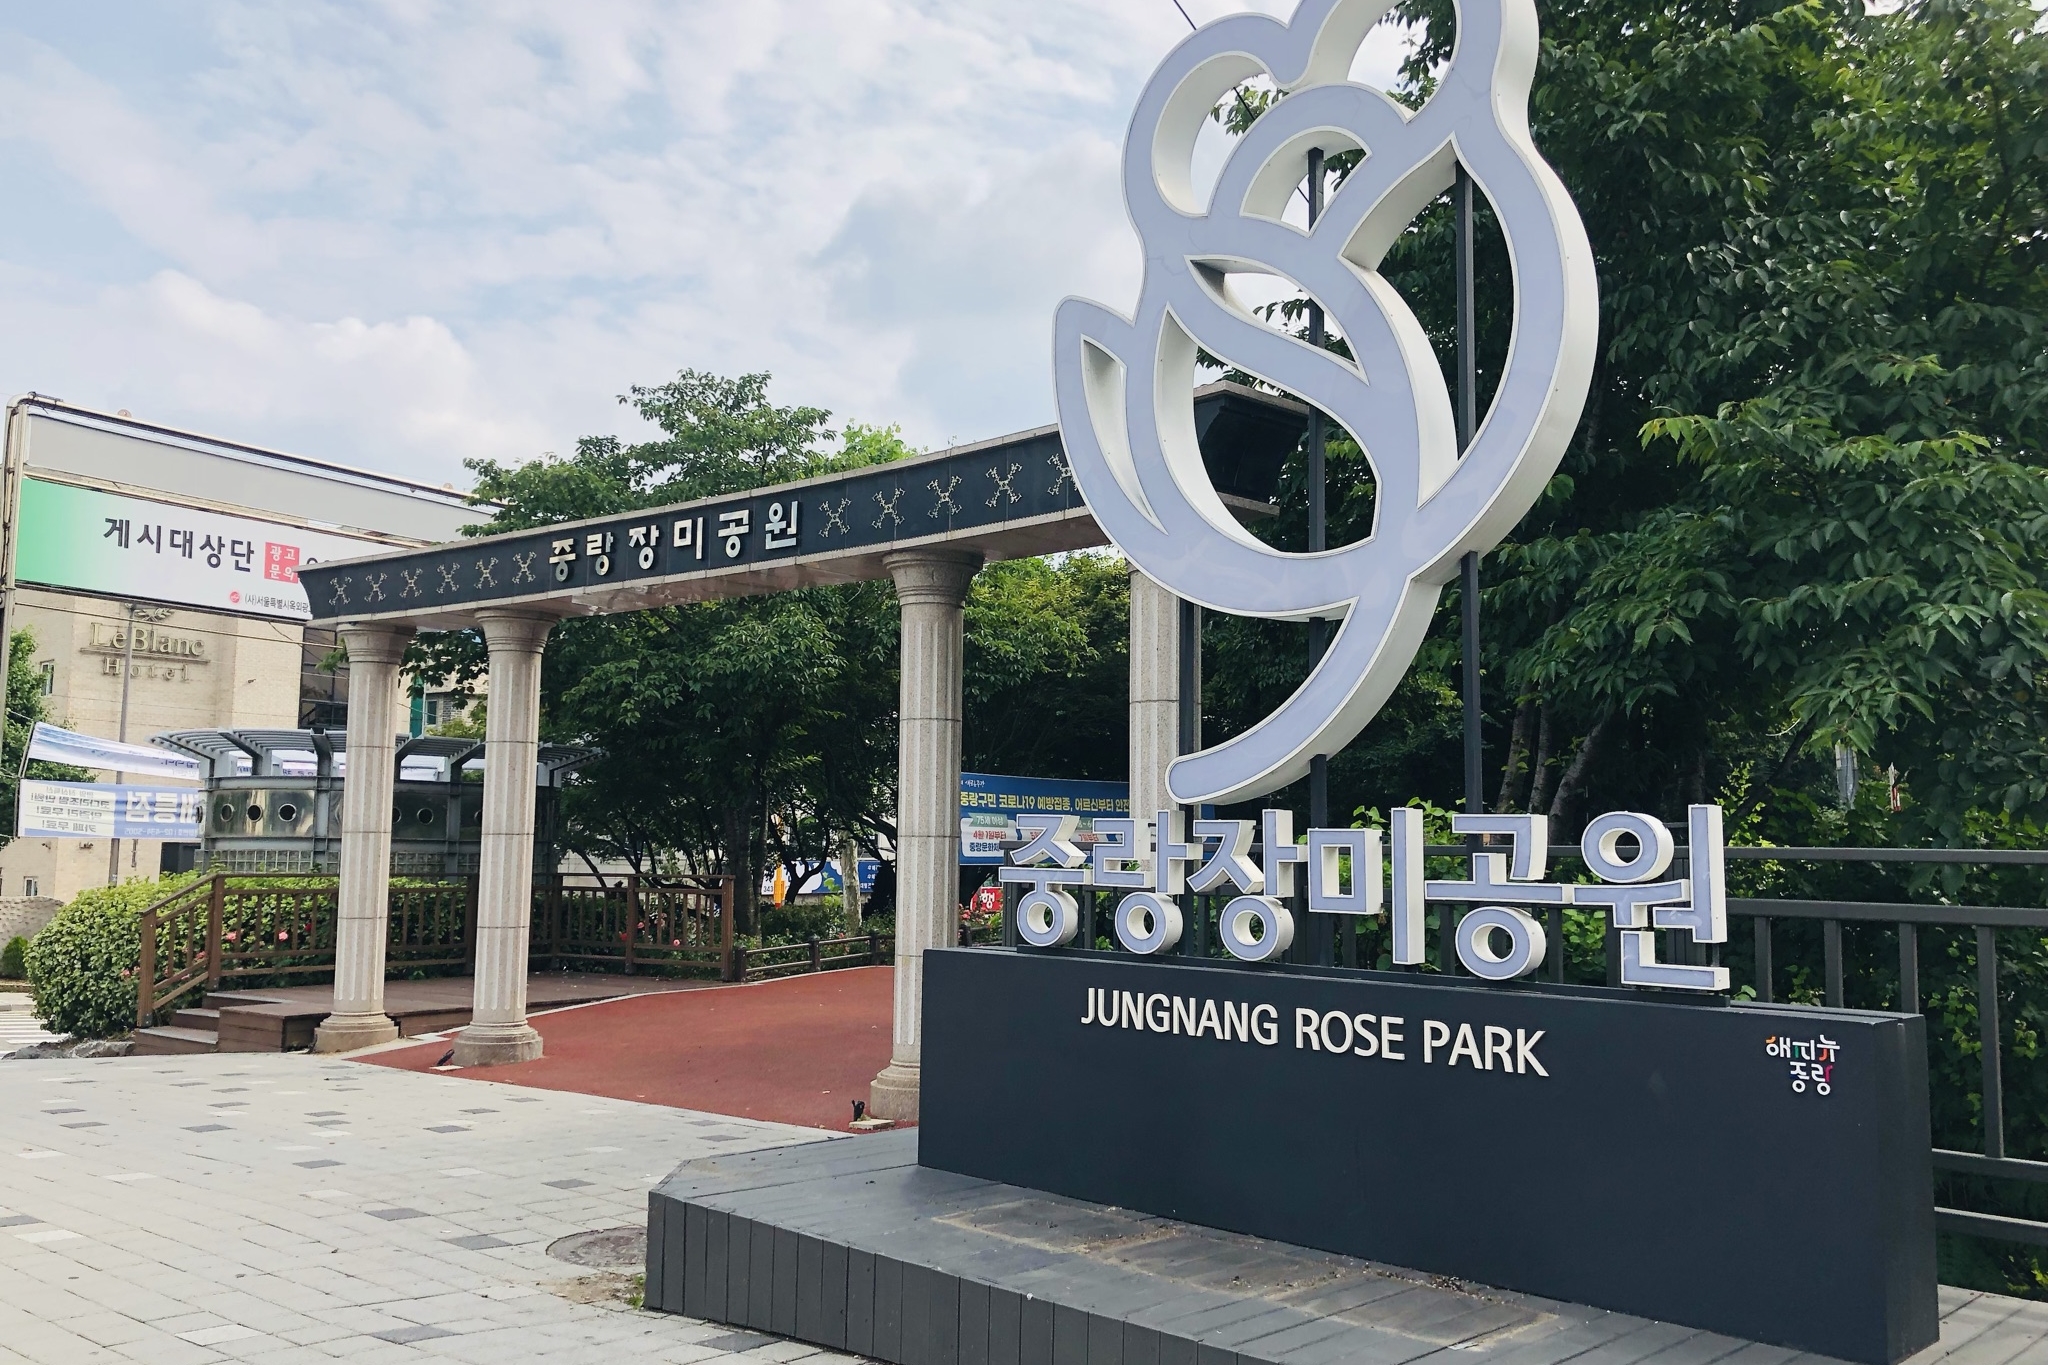 Seoul Rose Park (Jungnang Rose Park)0 : Sculpture outside Seoul Rose Park (Jungnang Rose Park)